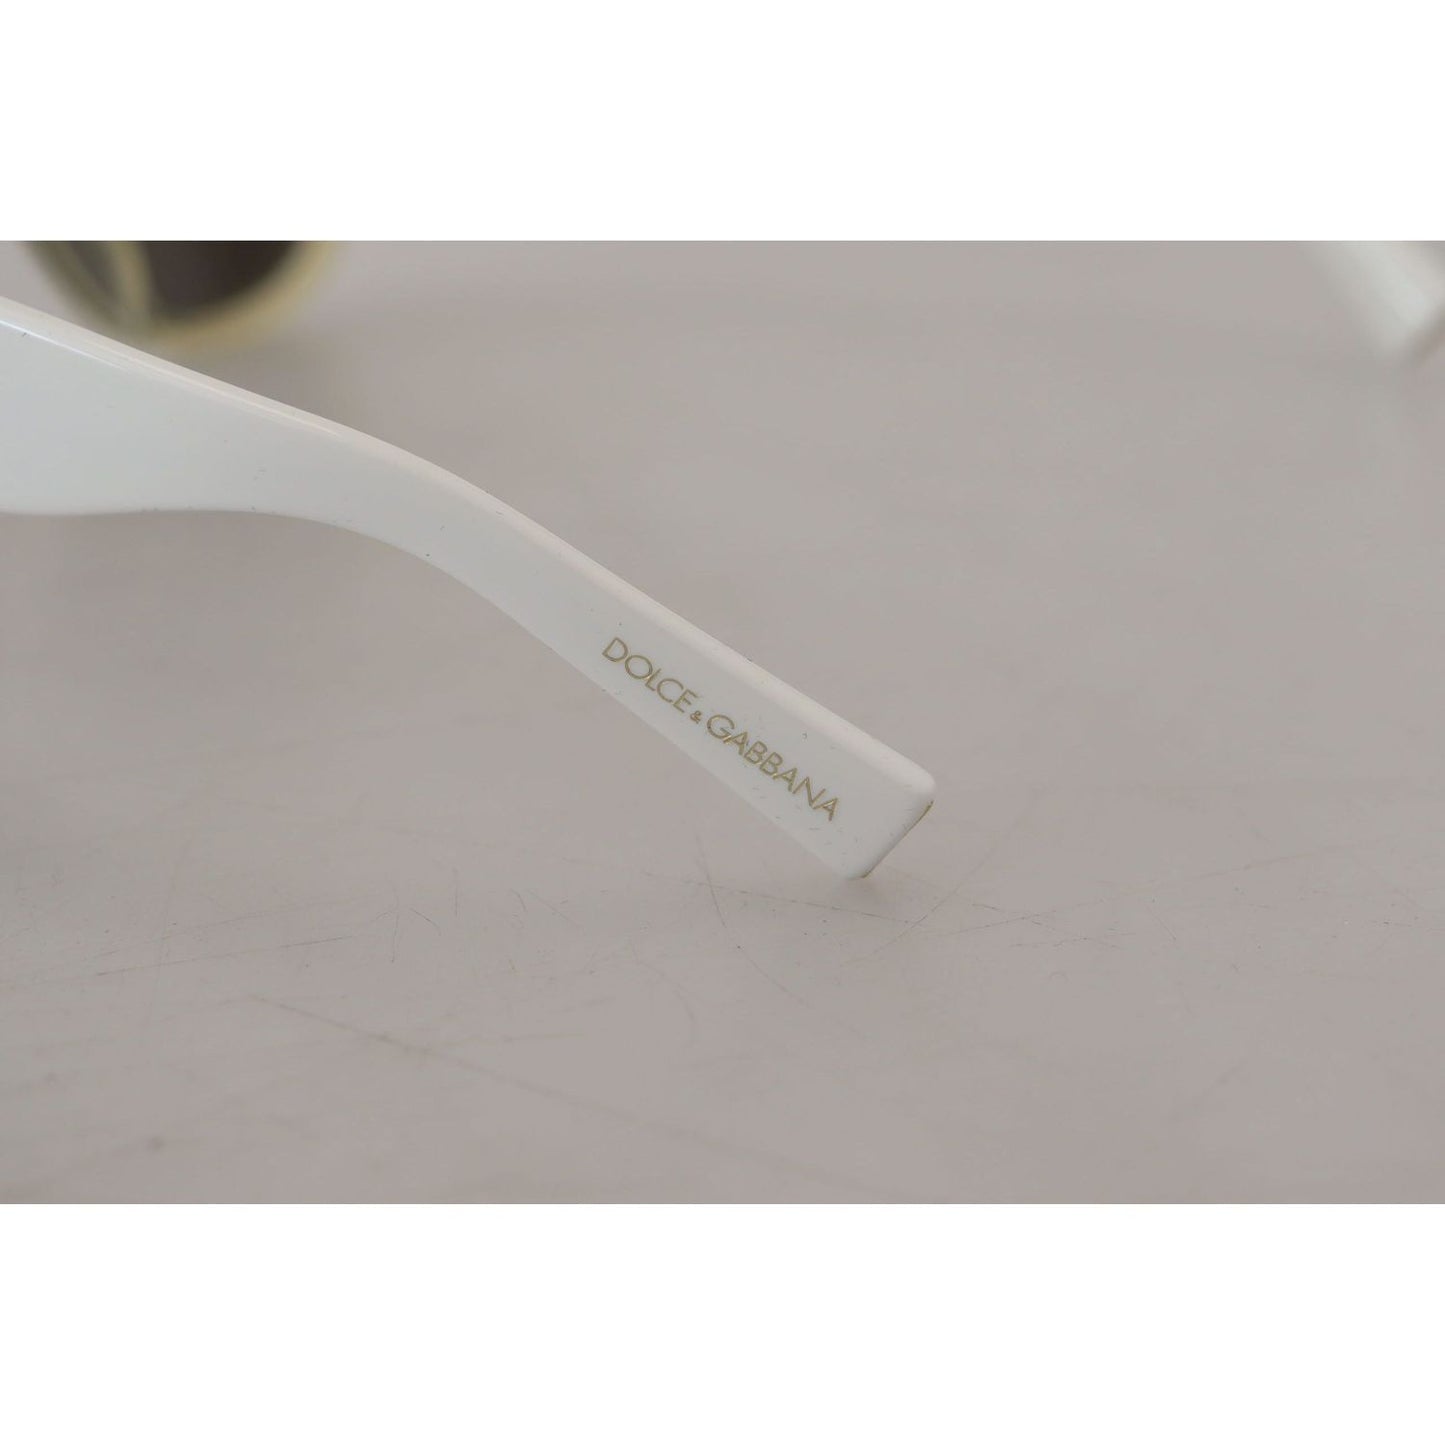 Dolce & Gabbana Elegant White Acetate Sunglasses for Women white-acetate-full-rim-frame-shades-dg4356f-sunglasses IMG_4039-scaled-49ee745b-b6a.jpg